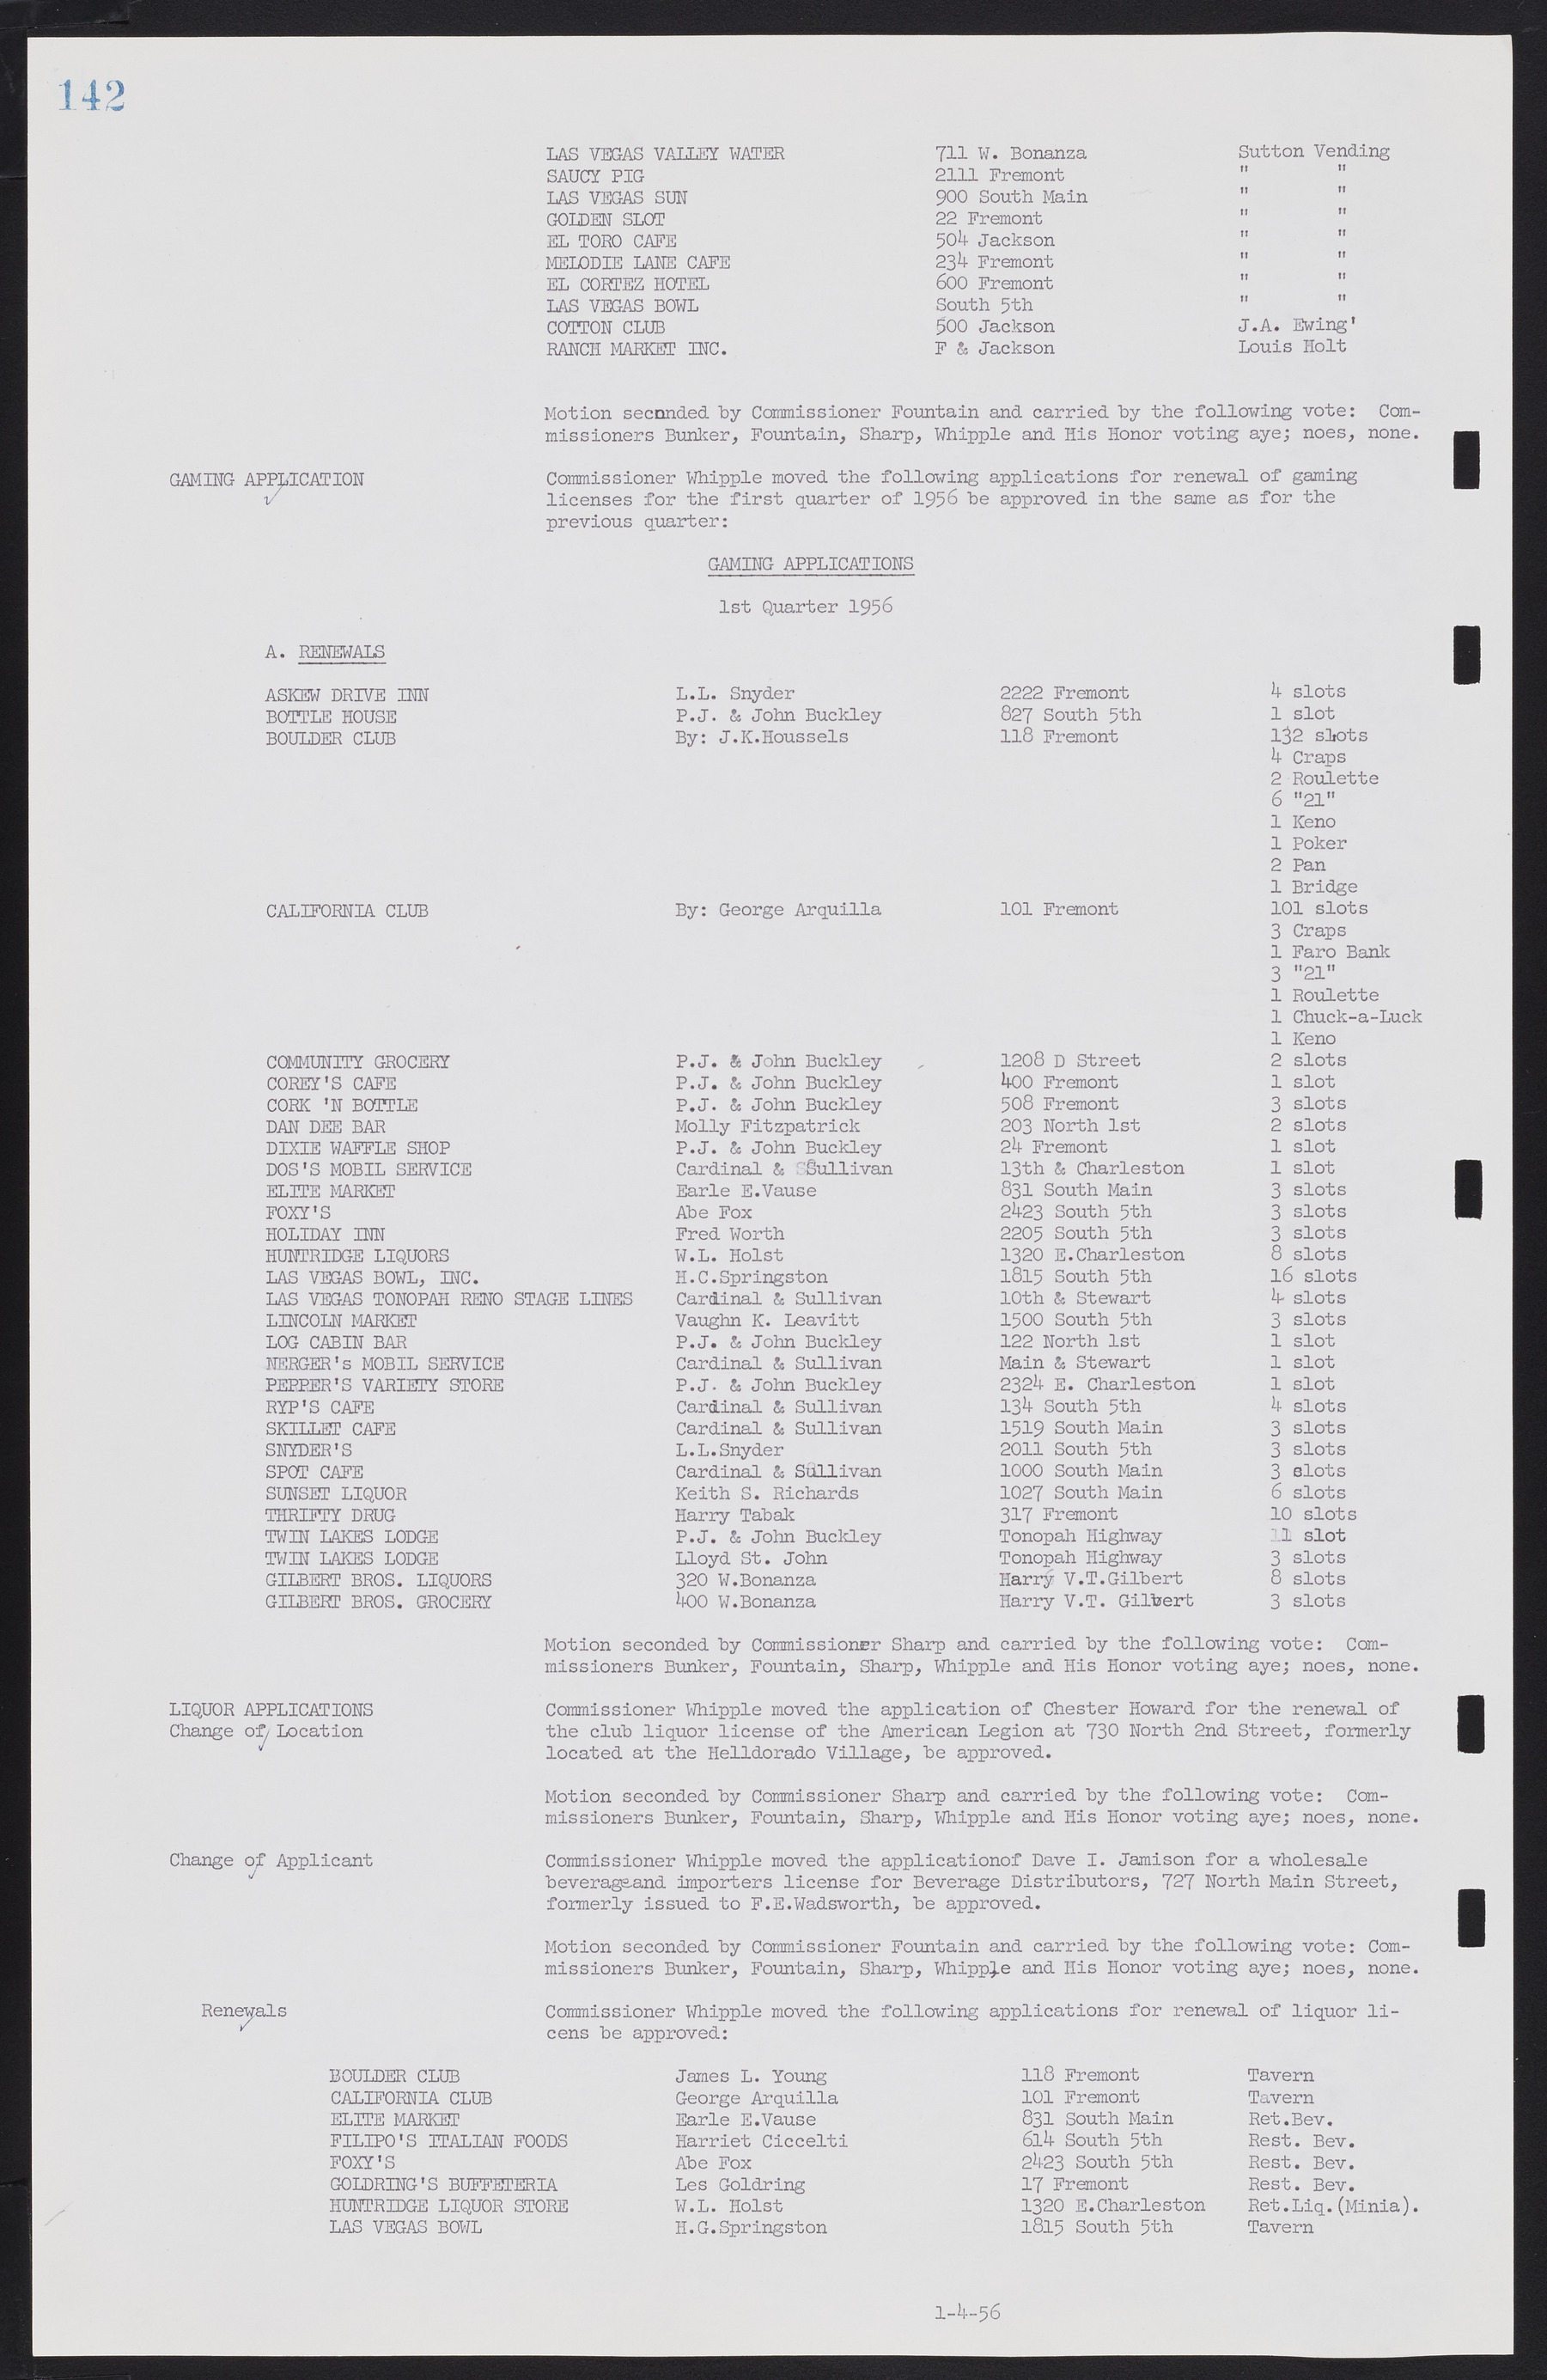 Las Vegas City Commission Minutes, September 21, 1955 to November 20, 1957, lvc000010-152